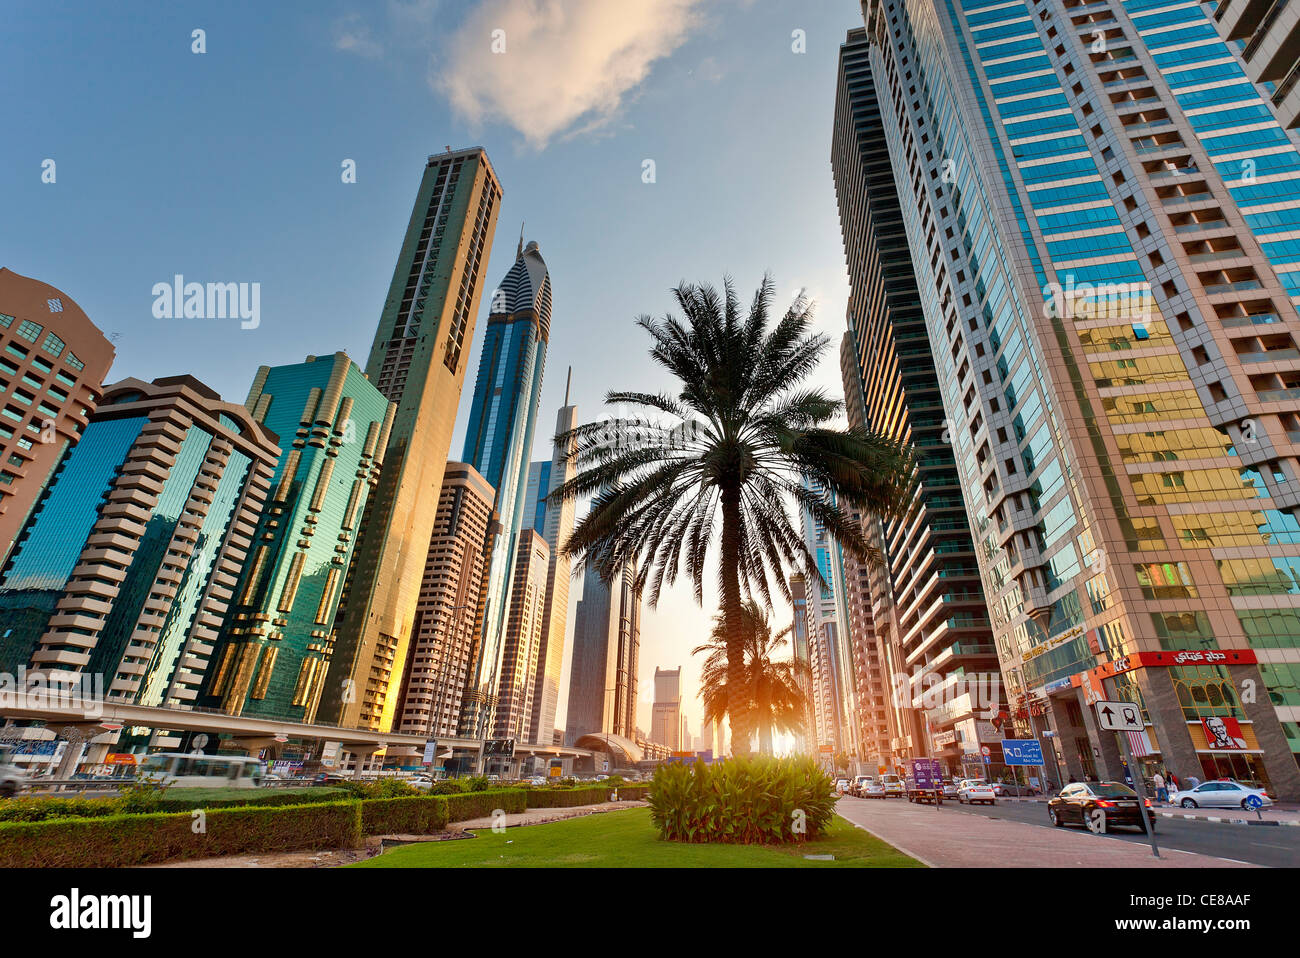 Asia, Arabia, Dubai Emirate, Dubai, Sheikh Zayed Road Stock Photo